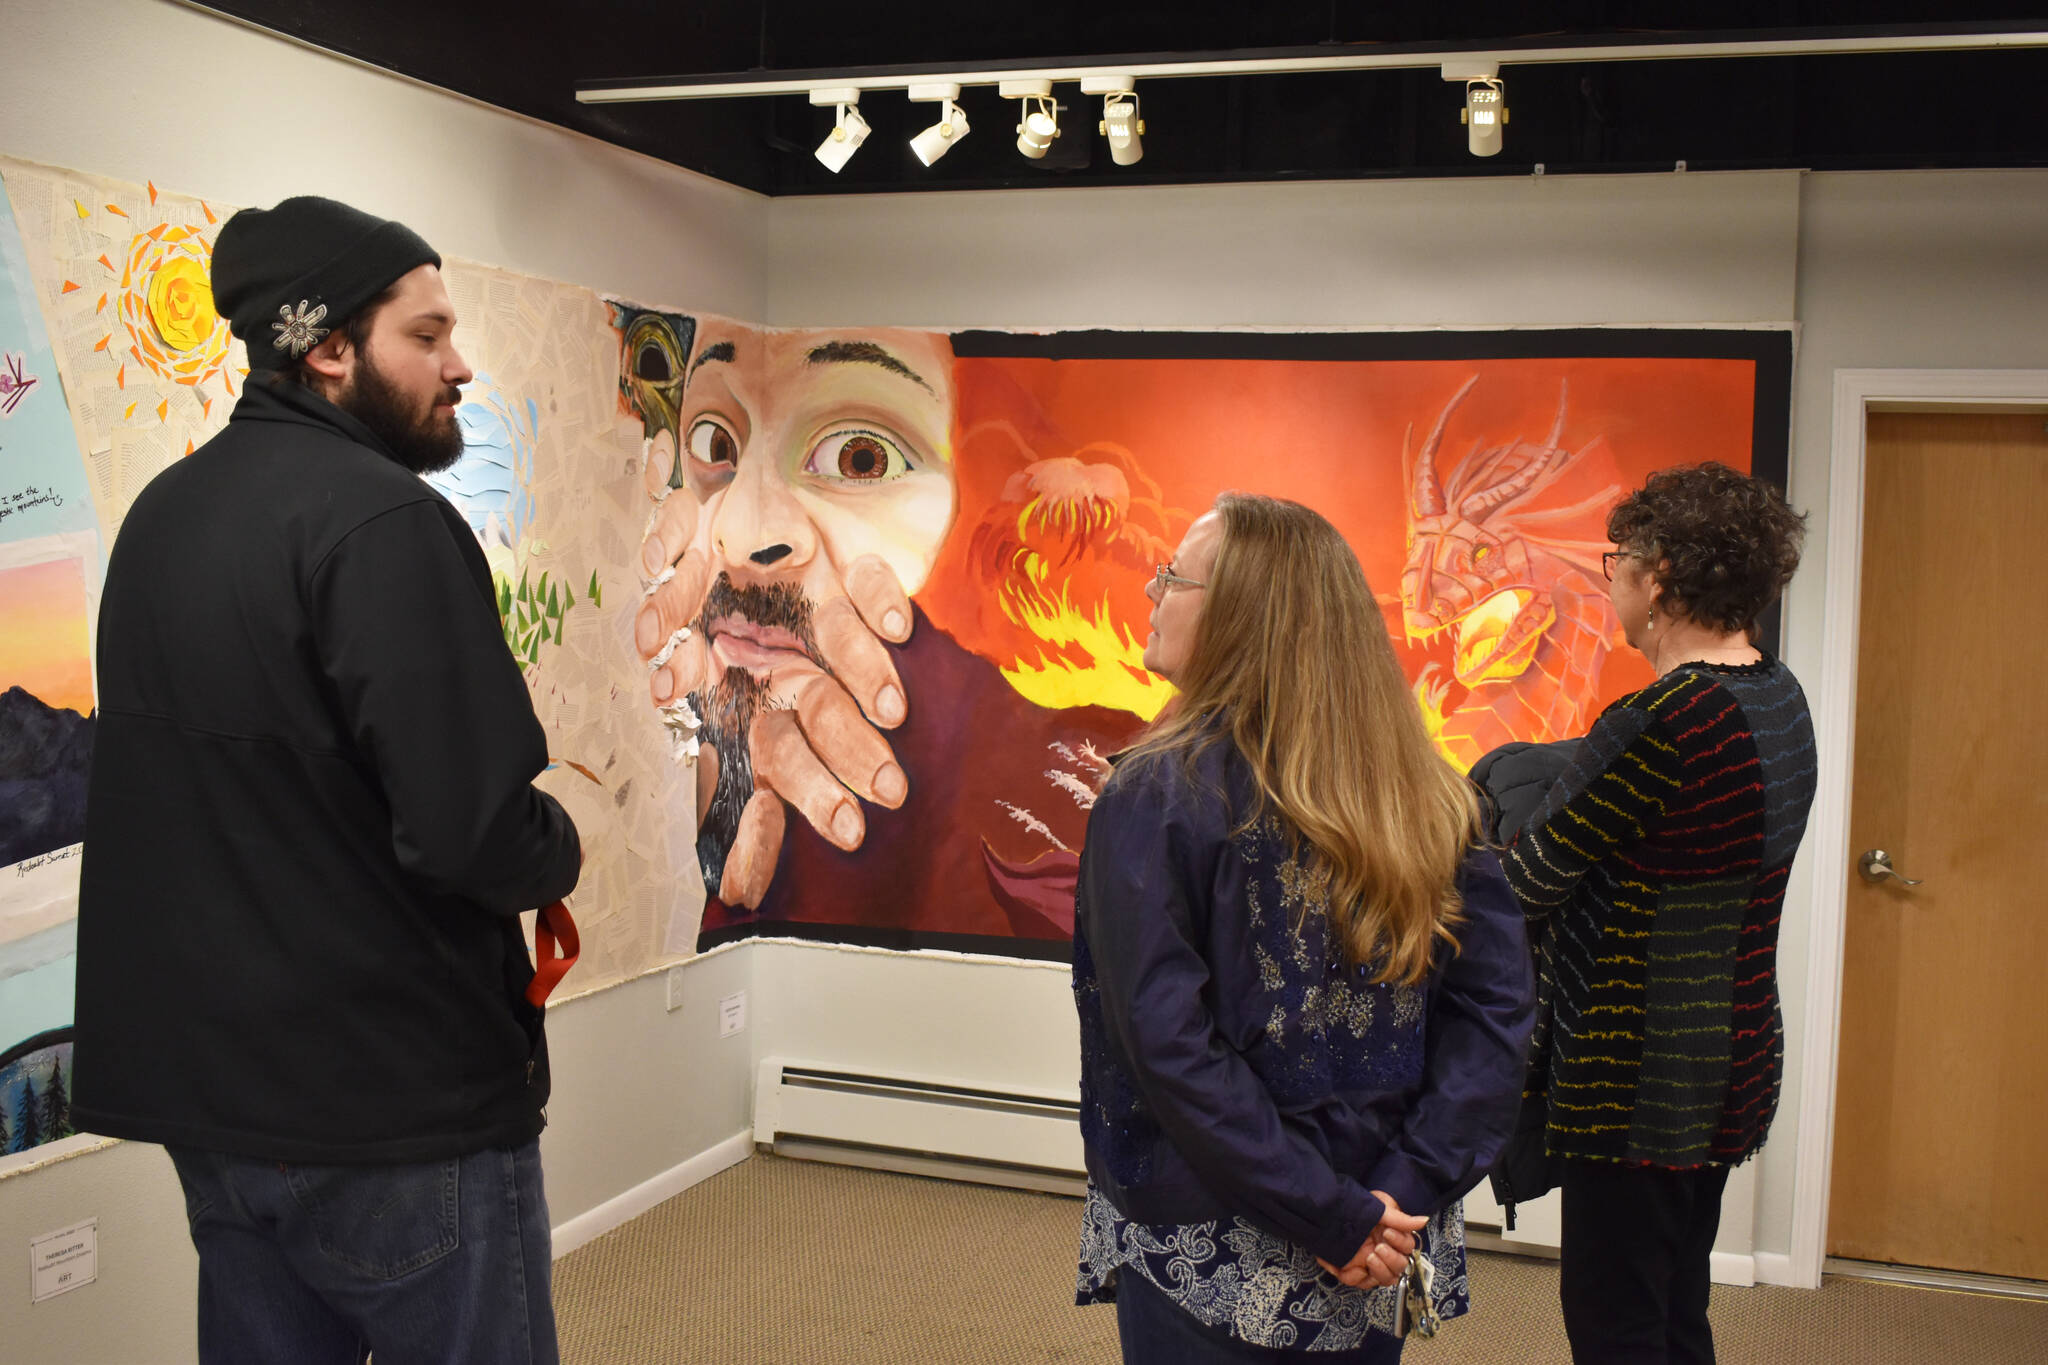 Jason Ramirez speaks in front of his piece “Got Space?” to attendees of the Mural 2022 opening reception at the Kenai Art Center in Kenai, Alaska, on Thursday, Nov. 10, 2022. (Jake Dye/Peninsula Clarion)